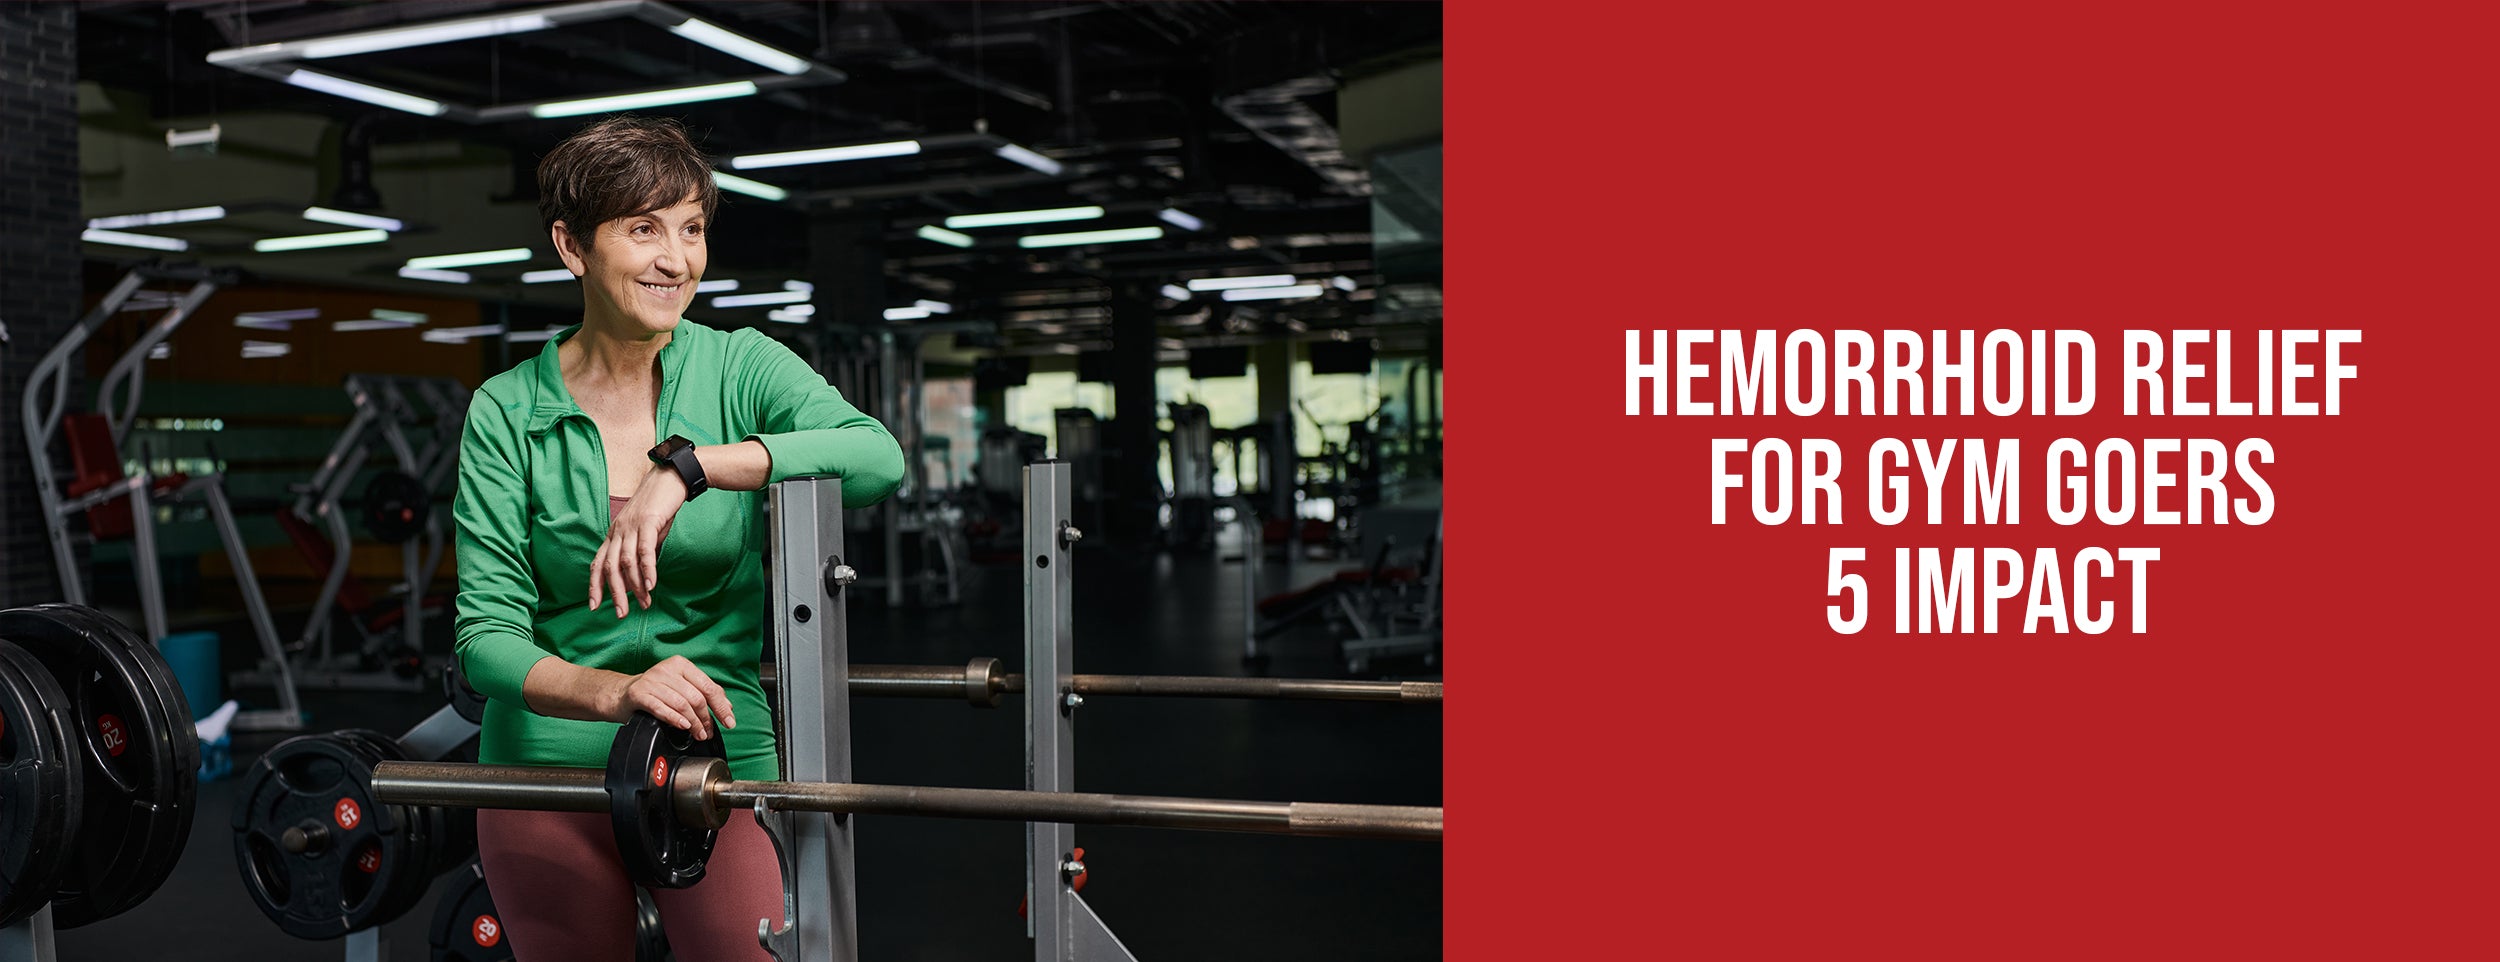 5 Impactful Hemorrhoids for Gym Goers